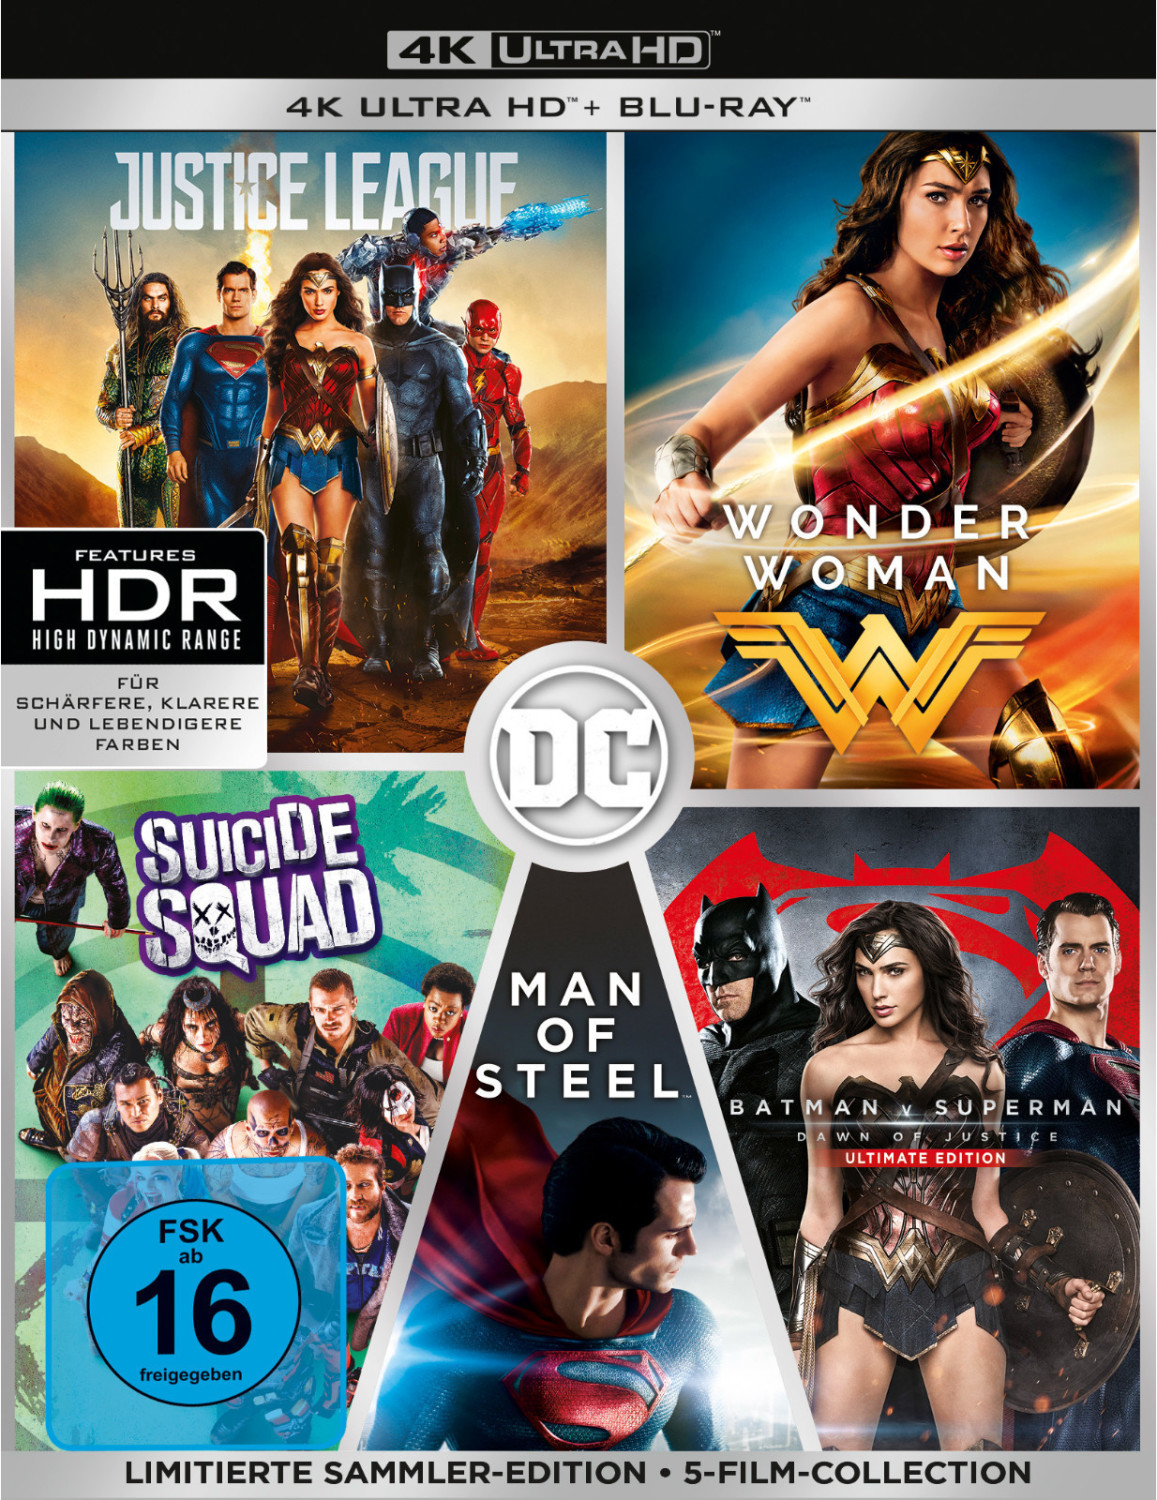 Justice League / Wonder Woman / Suicide Squad / Man of Steel / Batman v Superman - Dawn of Justice: Ultimate Edition (Limitierte Sammler-Edition) (4K Ultra HD) [Blu-ray]